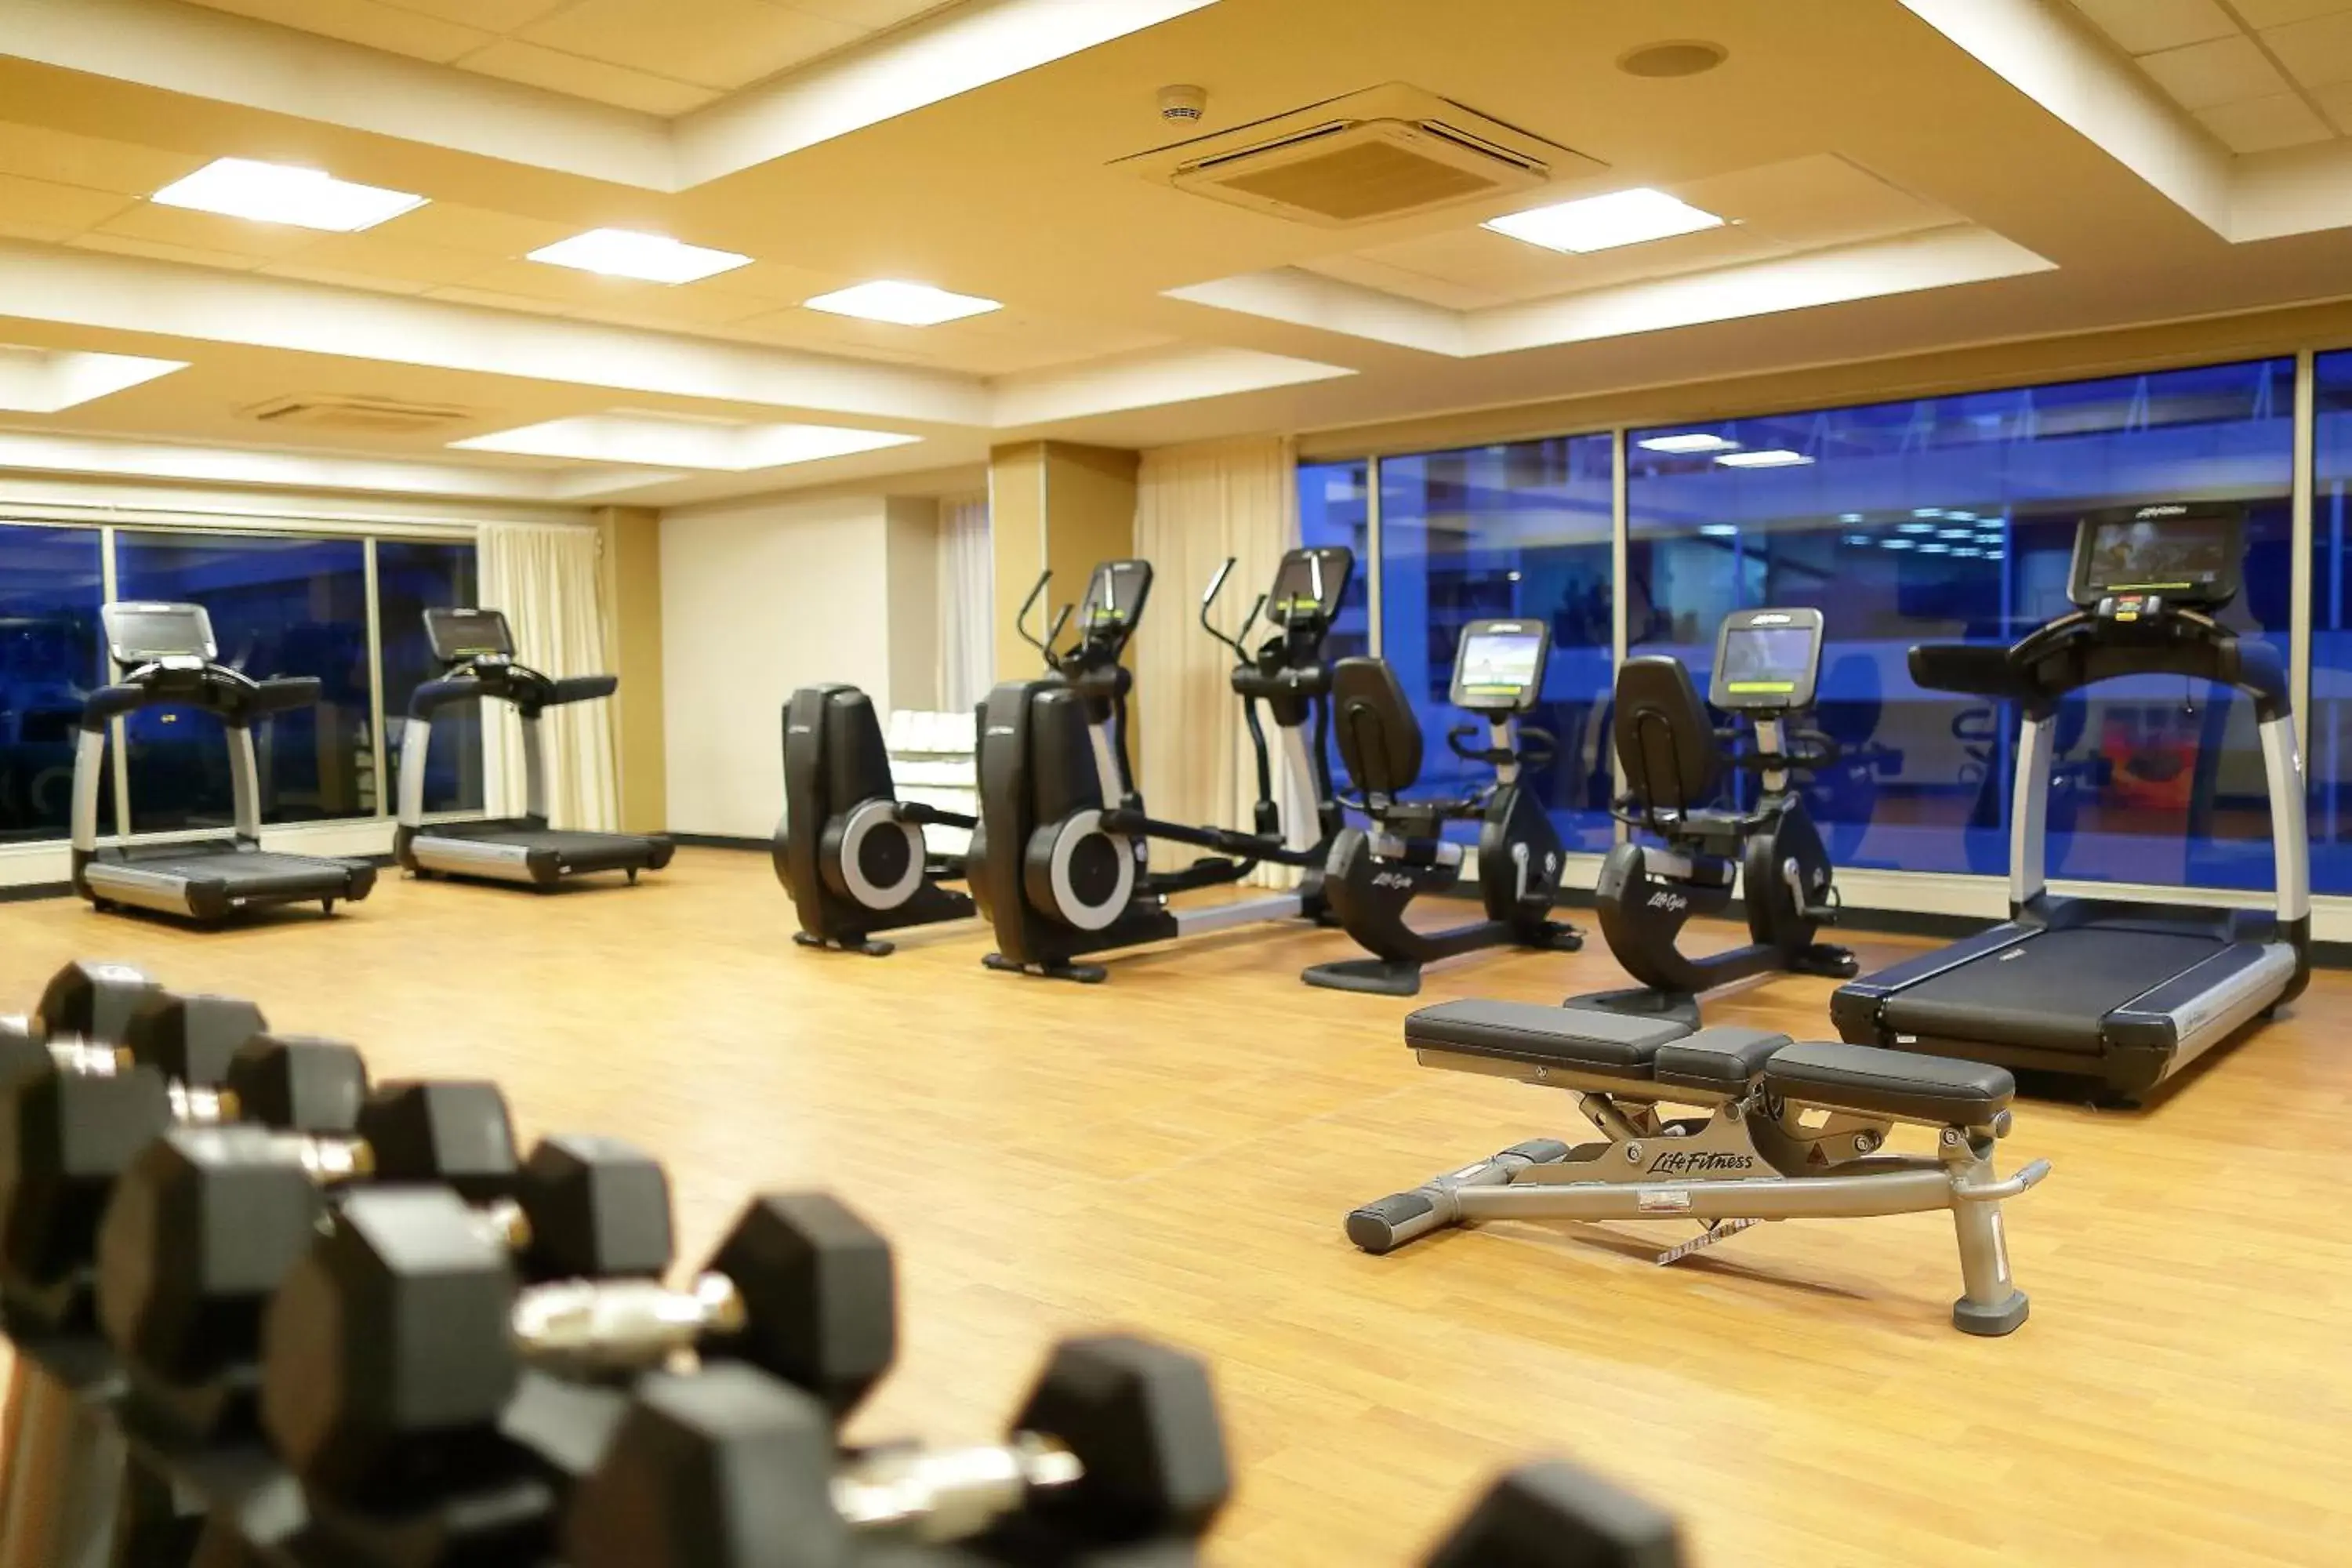 Fitness centre/facilities, Fitness Center/Facilities in Hyatt Place Tegucigalpa